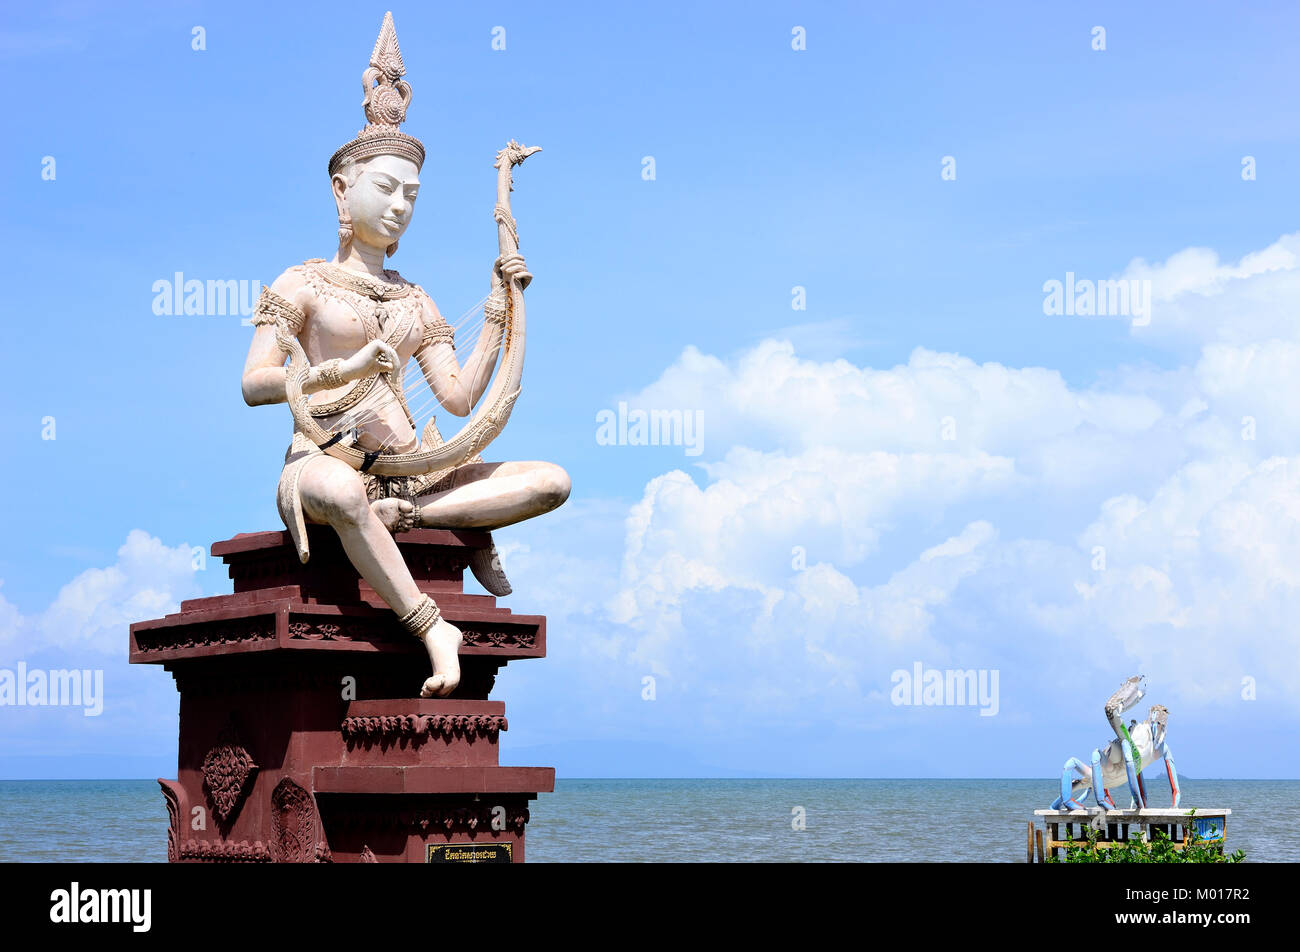 Sculpture de Vishnu dans la plage de Kep, Cambodge Banque D'Images